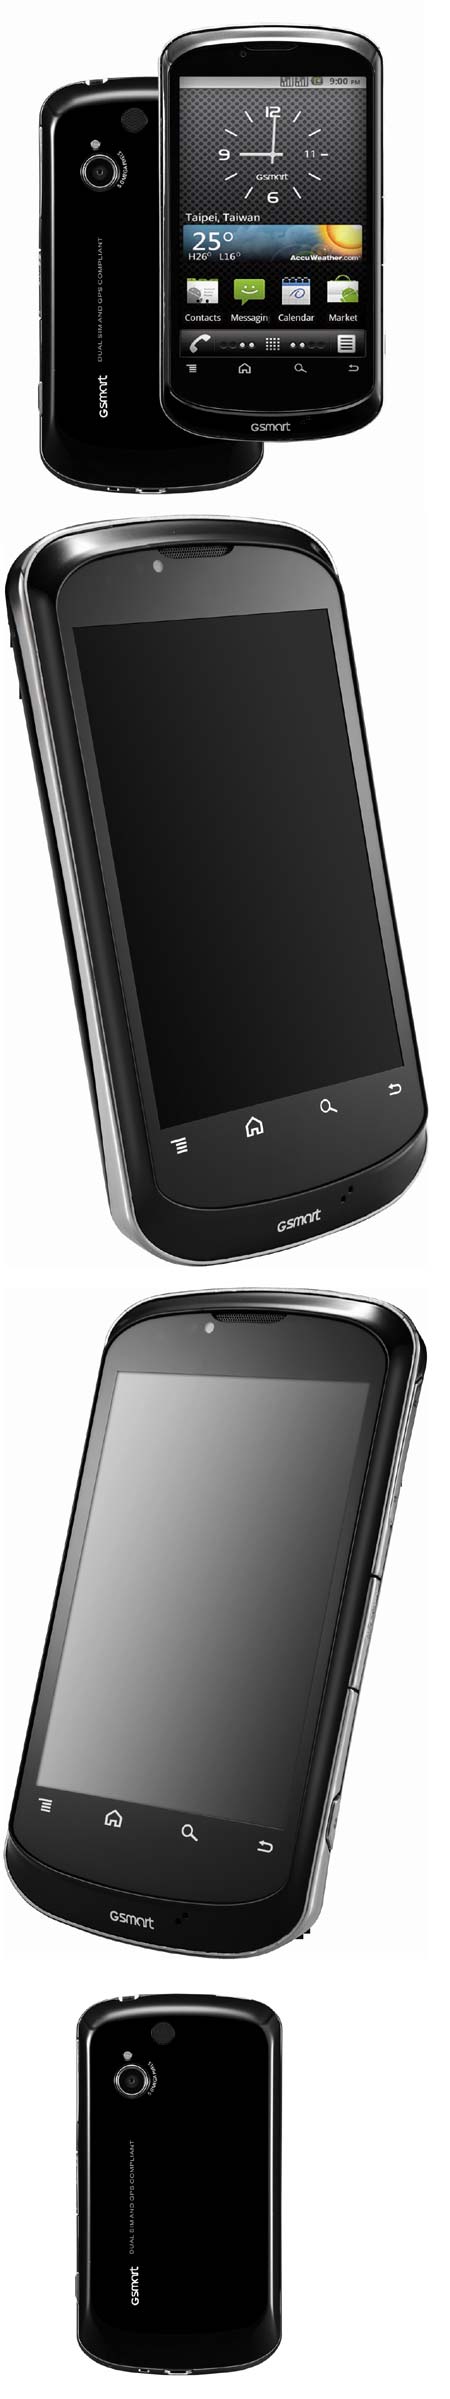 Gigabyte GSmart G1315 - двухсимовый смартфон